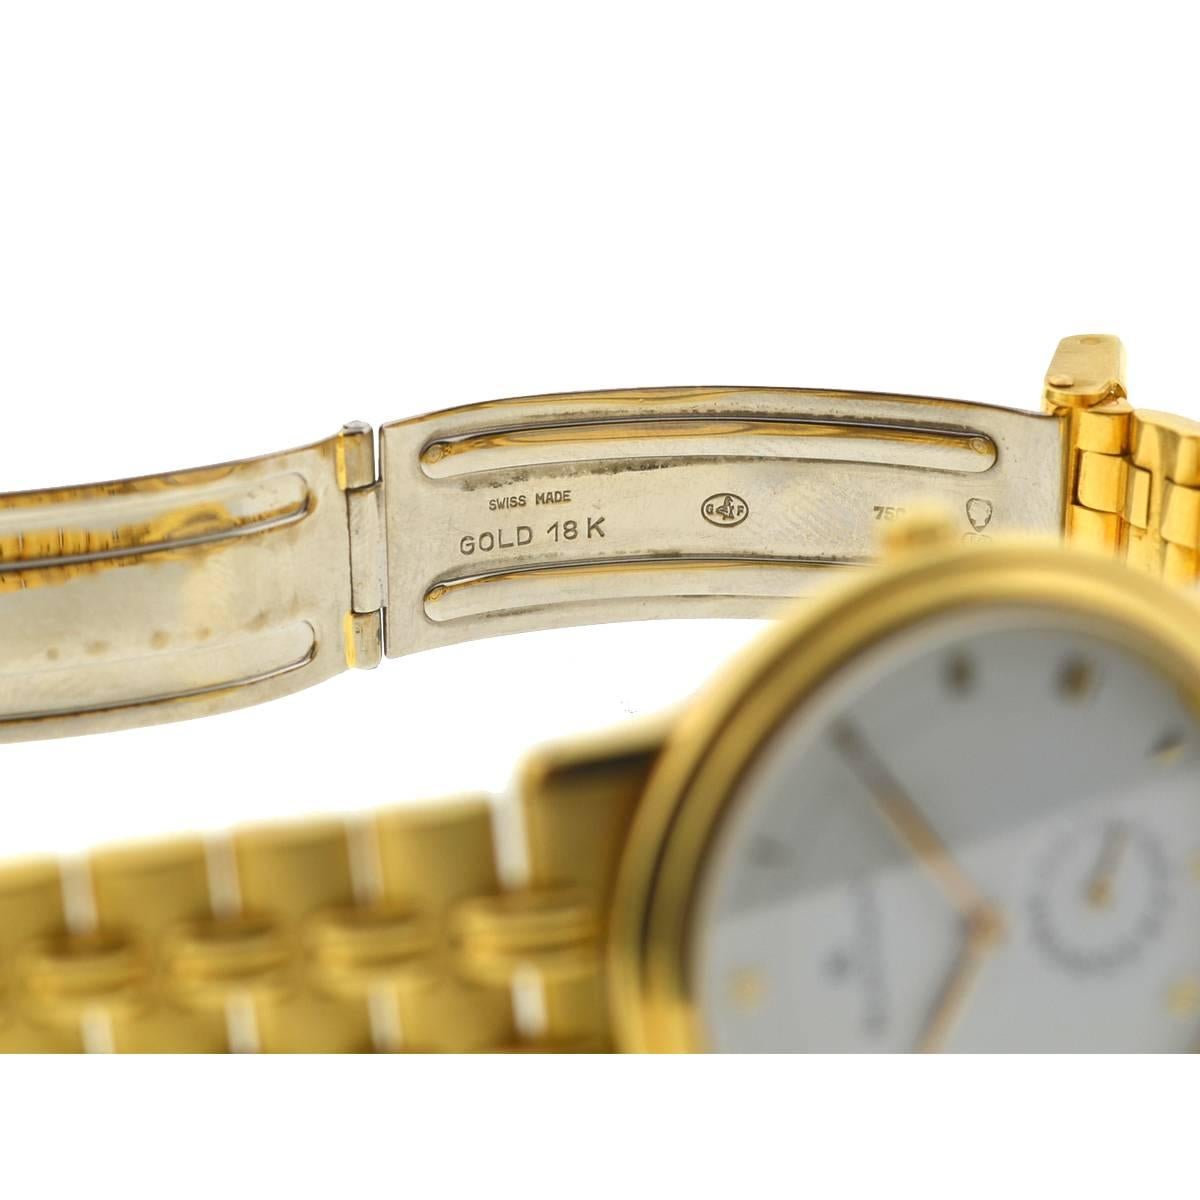 Blancpain Villeret 4795 Automatic Watch 18 Karat Yellow Gold 3